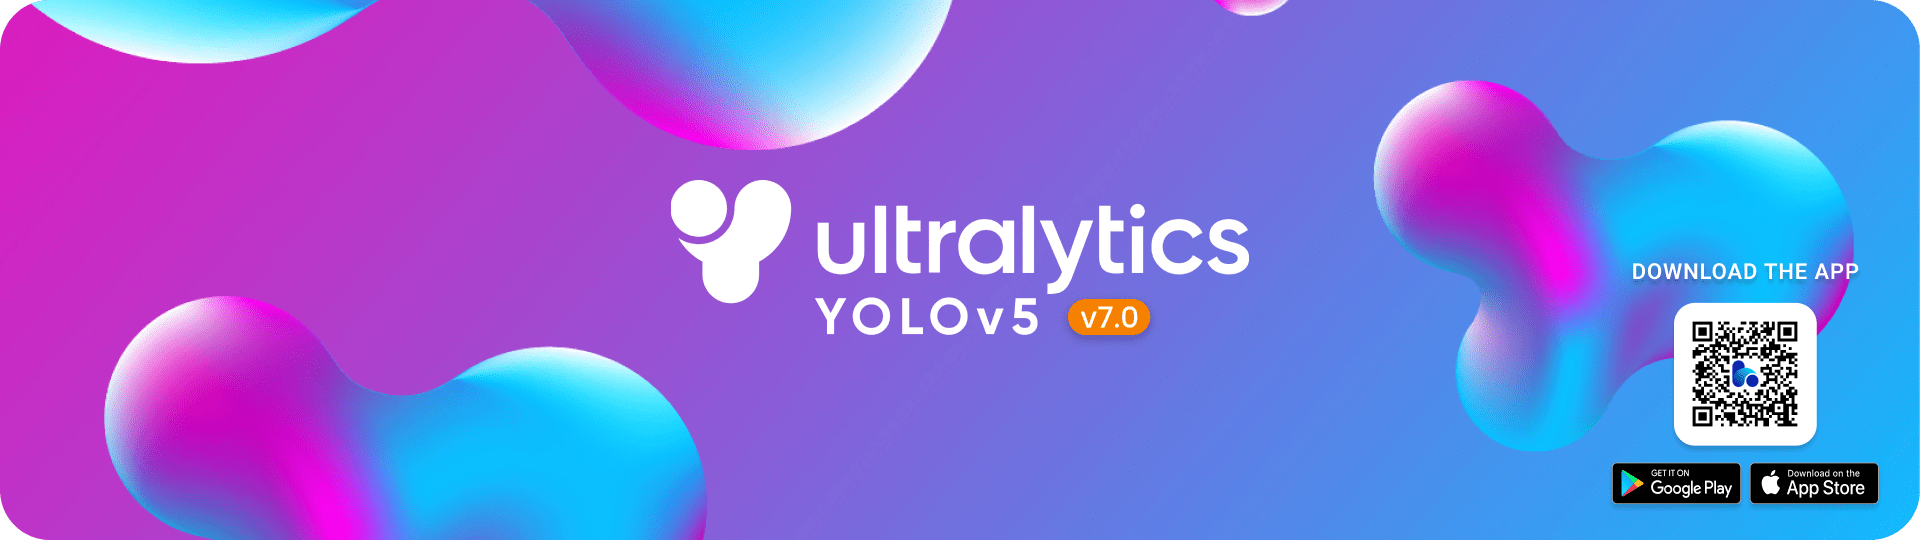 Ultralytics YOLOv5 v7.0 banner